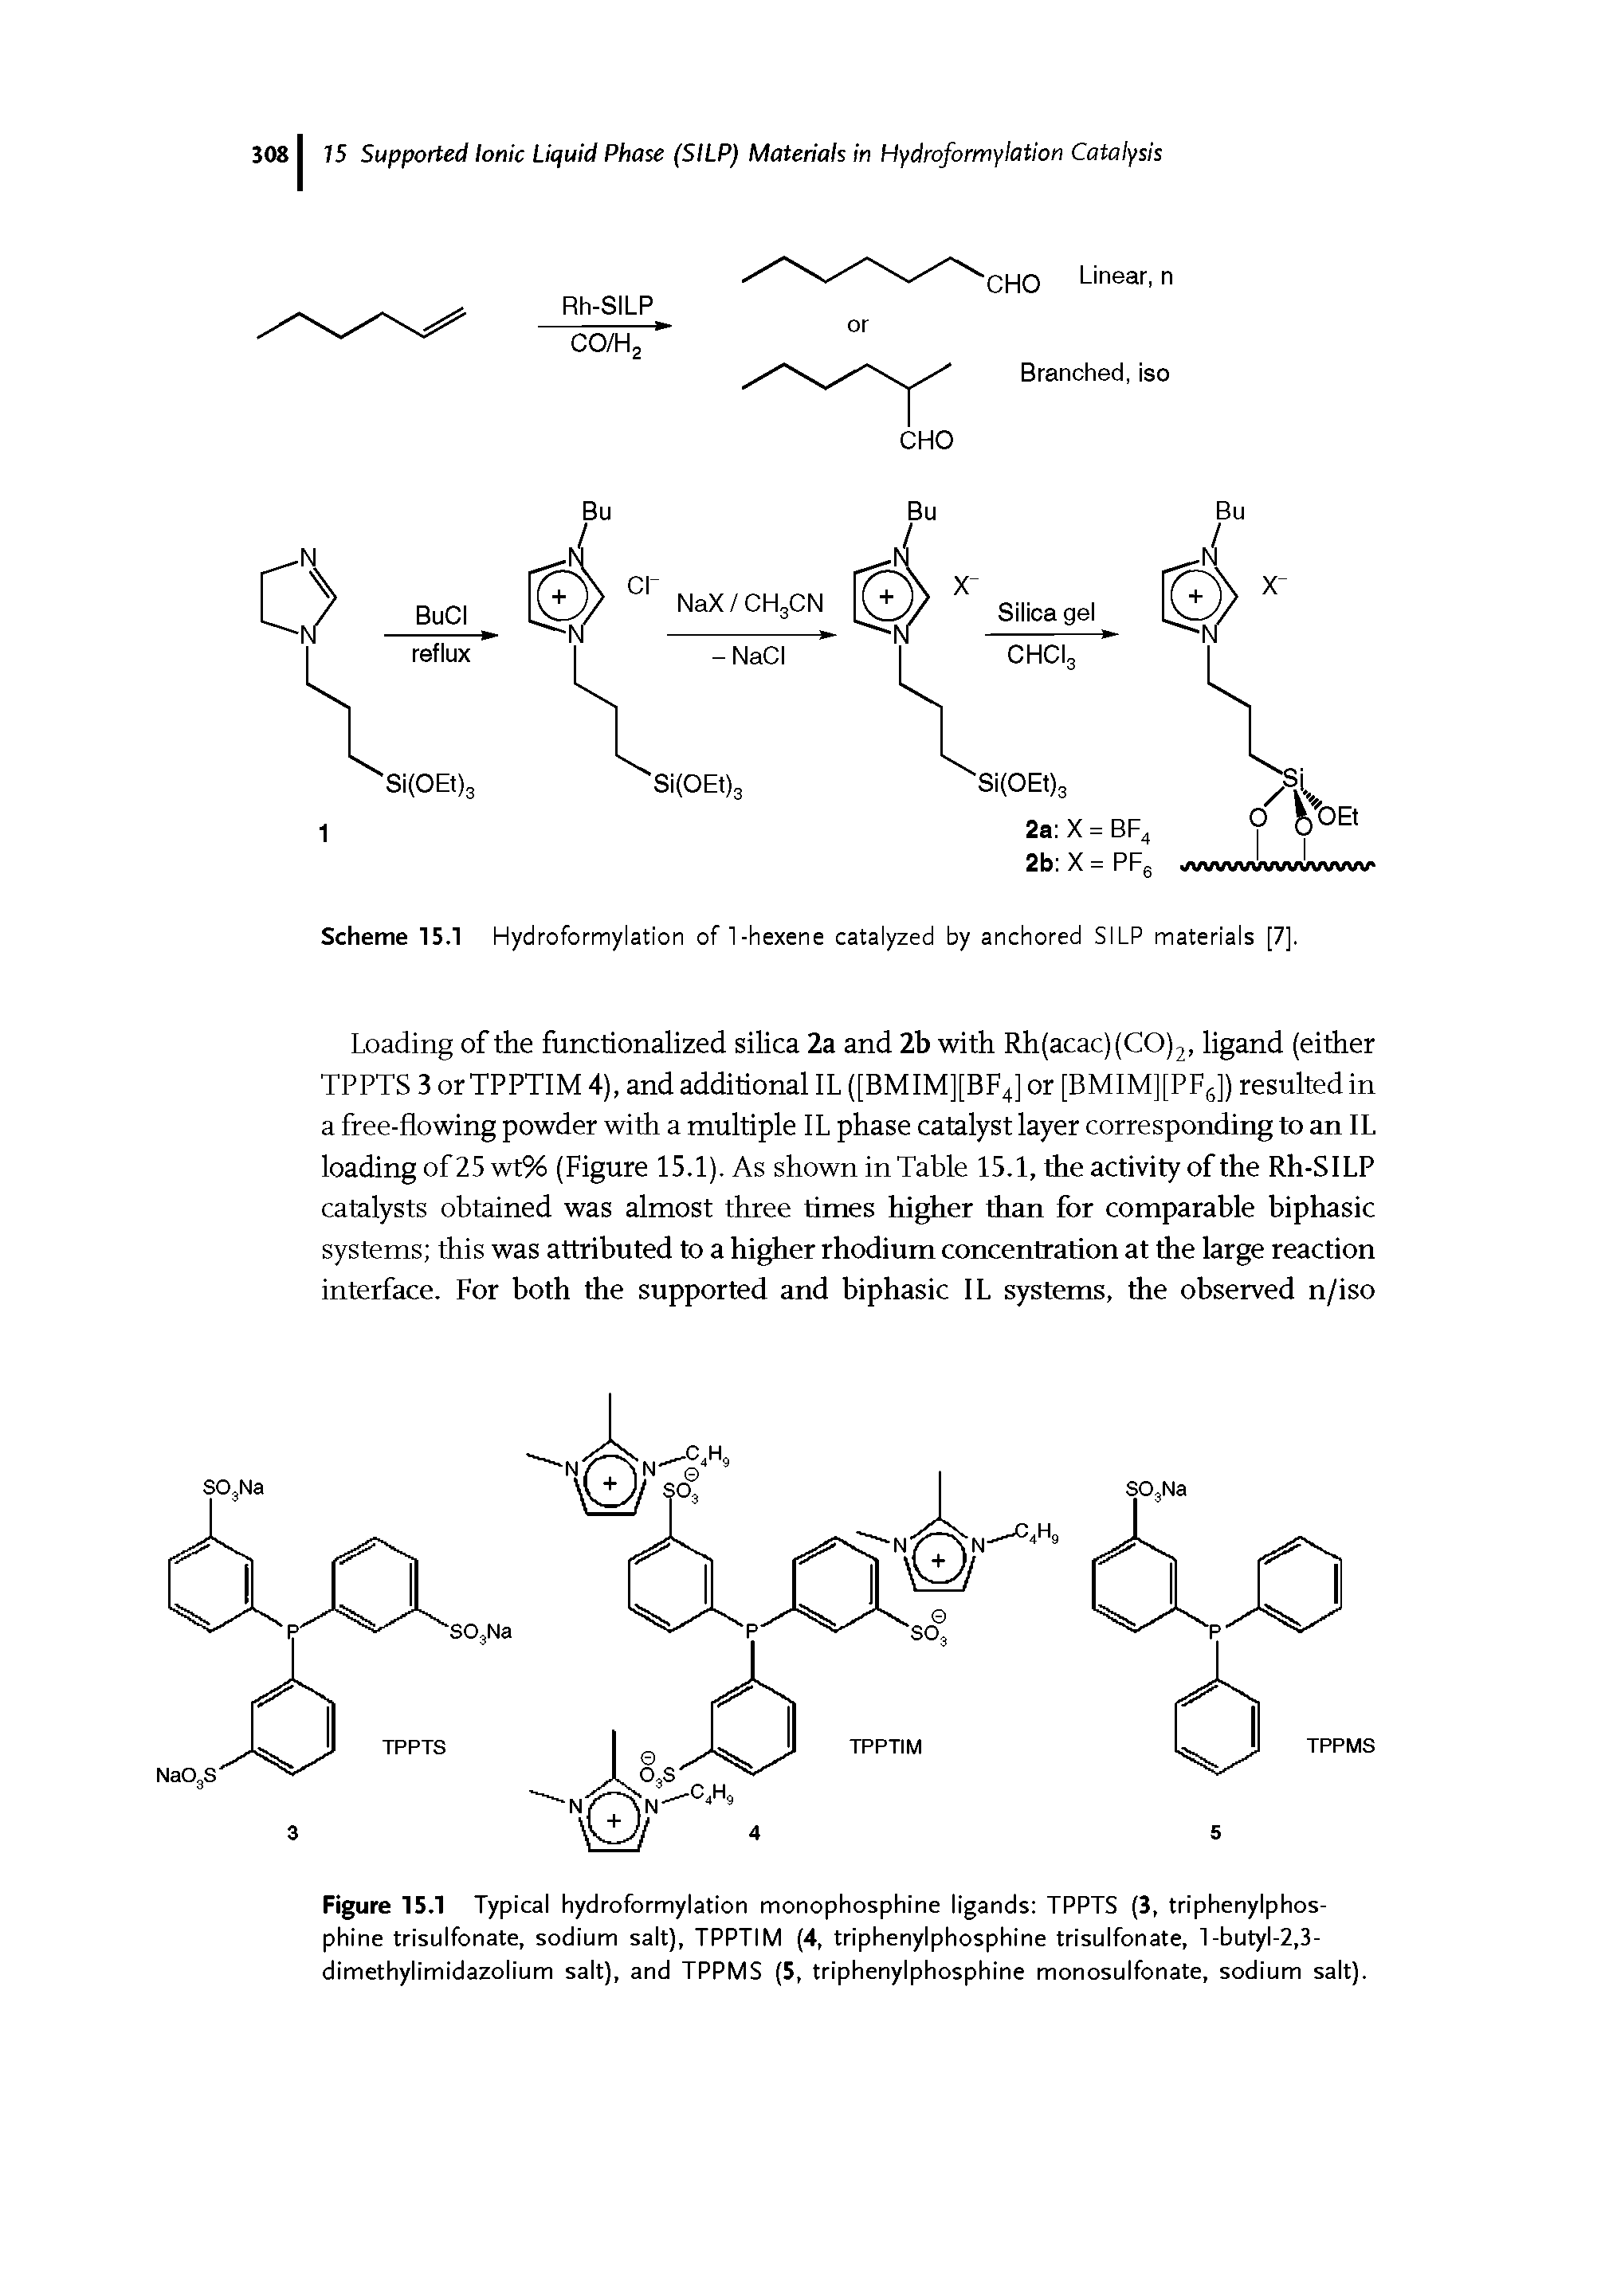 Figure 15.1 Typical hydroformylation monophosphine ligands TPPTS (3, triphenylphos-phine trisulfonate, sodium salt), TPPTIM (4, triphenylphosphine trisulfonate, l-butyl-2,3-dimethylimidazolium salt), and TPPMS (5, triphenylphosphine monosulfonate, sodium salt).